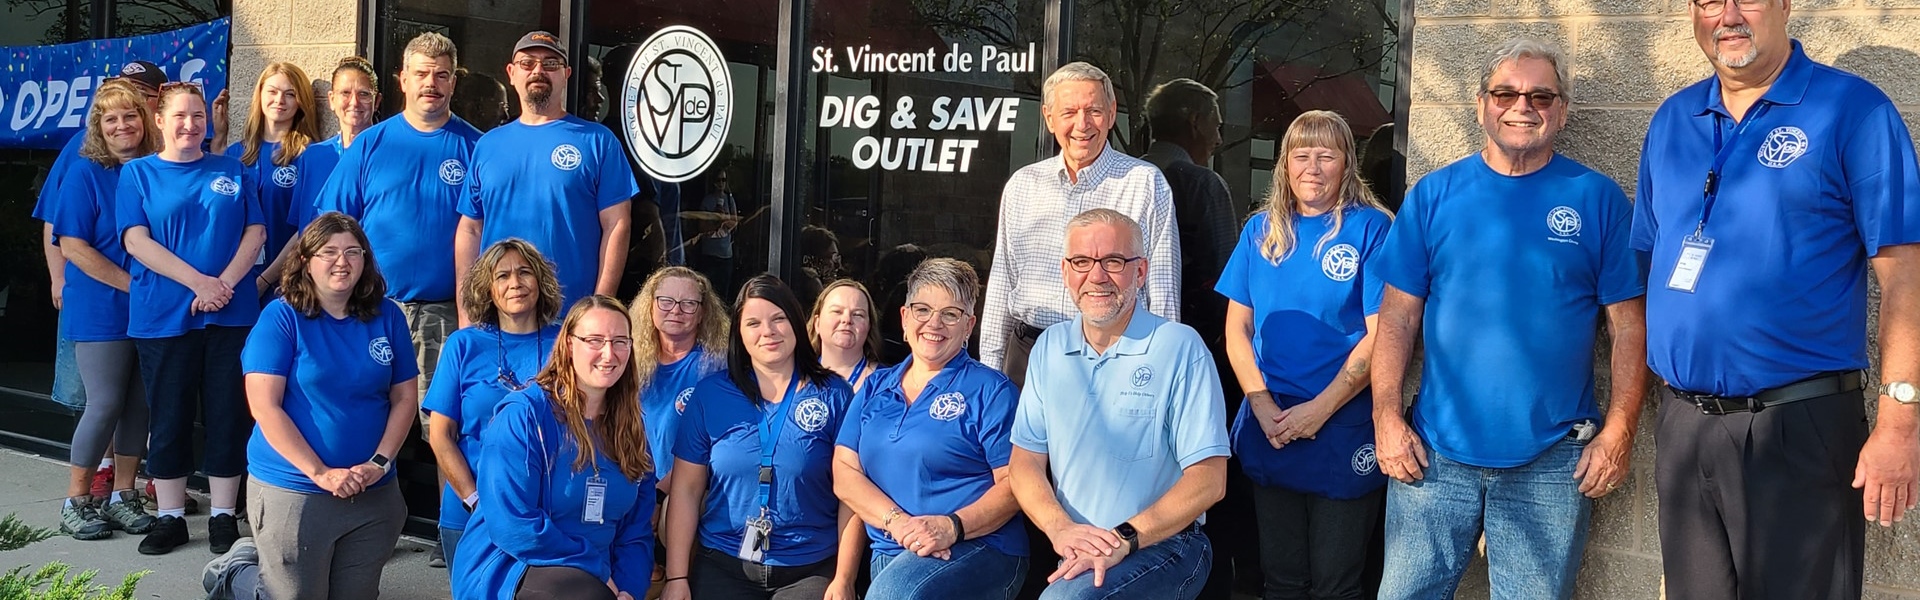 St. Vincent De Paul - Washington County Volunteers